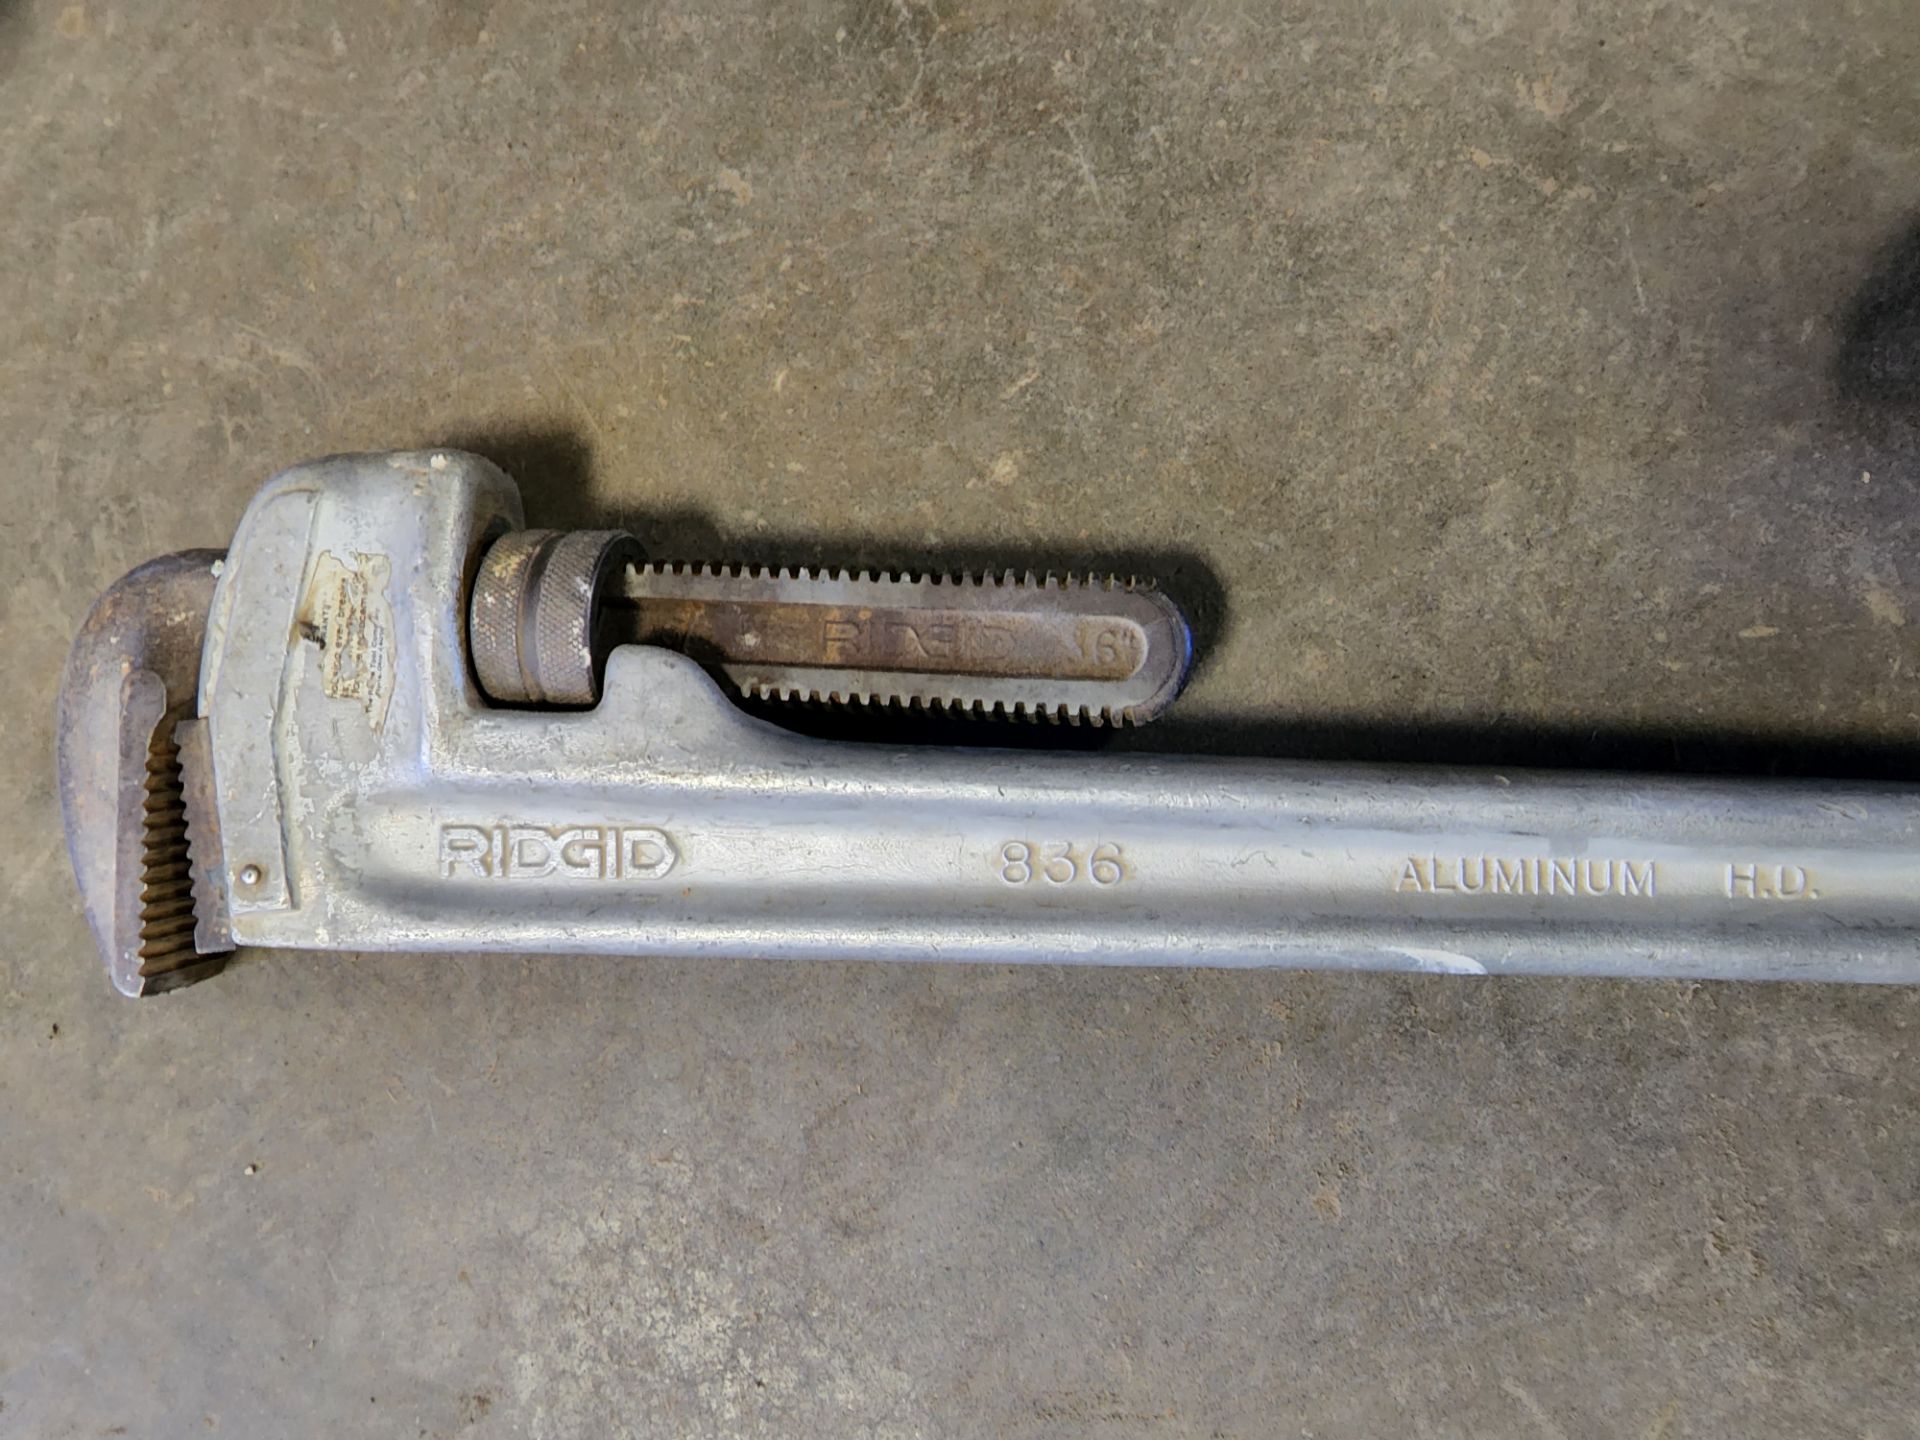 Ridgid 836 36" Aluminum Pipe Wrench - Image 2 of 2